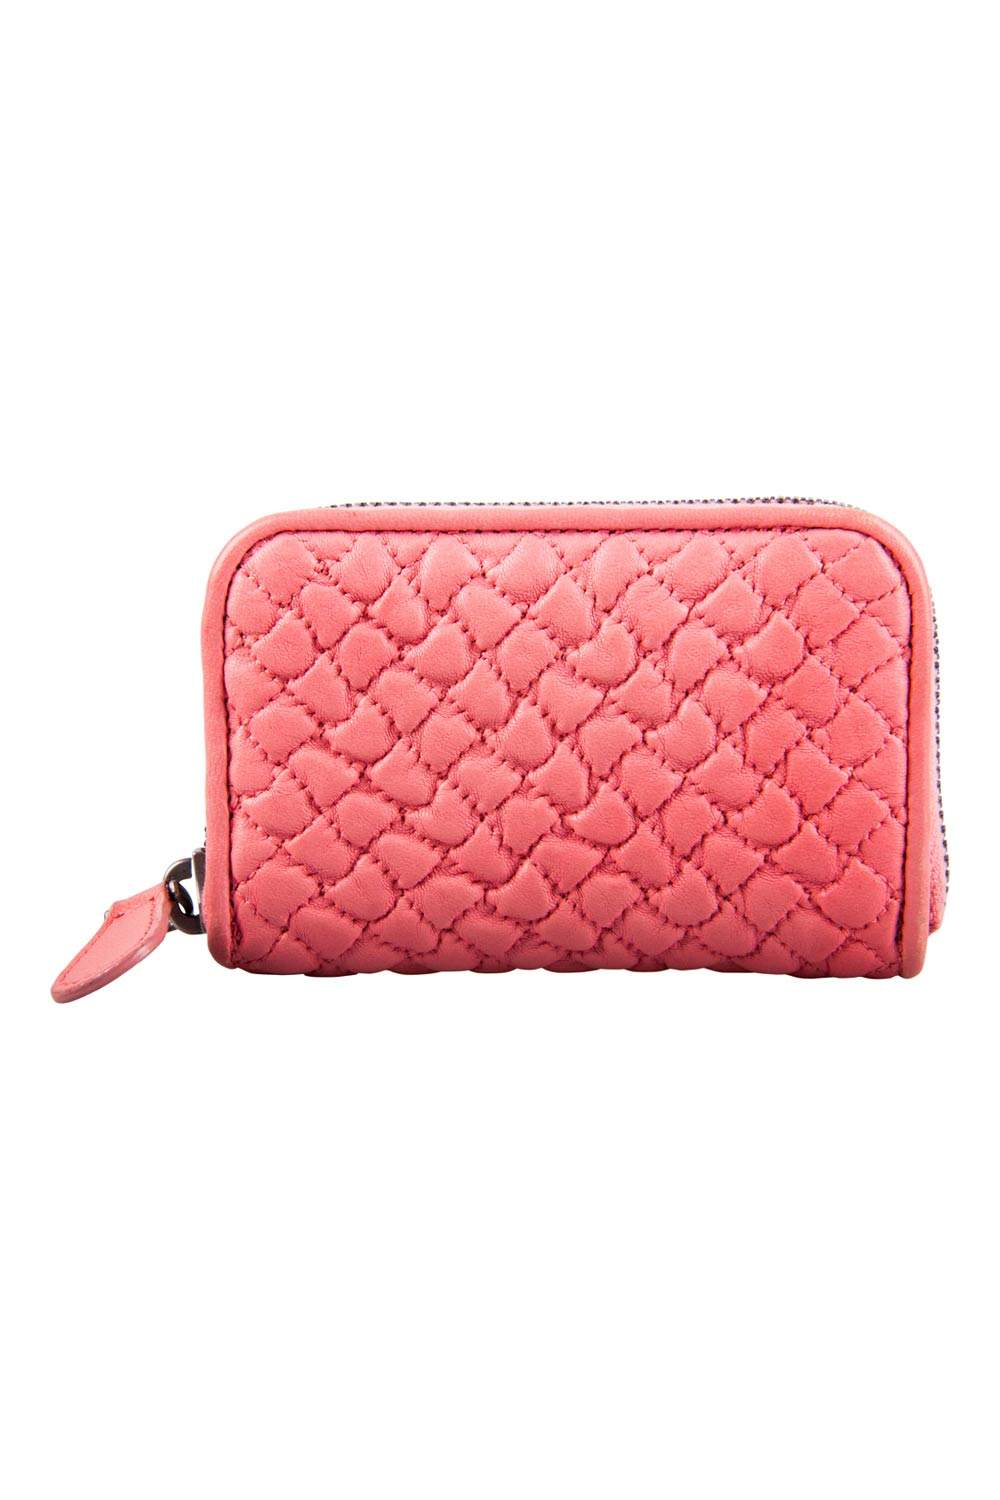 Bottega Veneta Coral Pink Leather Mini Zip Around Wallet Bottega Veneta ...